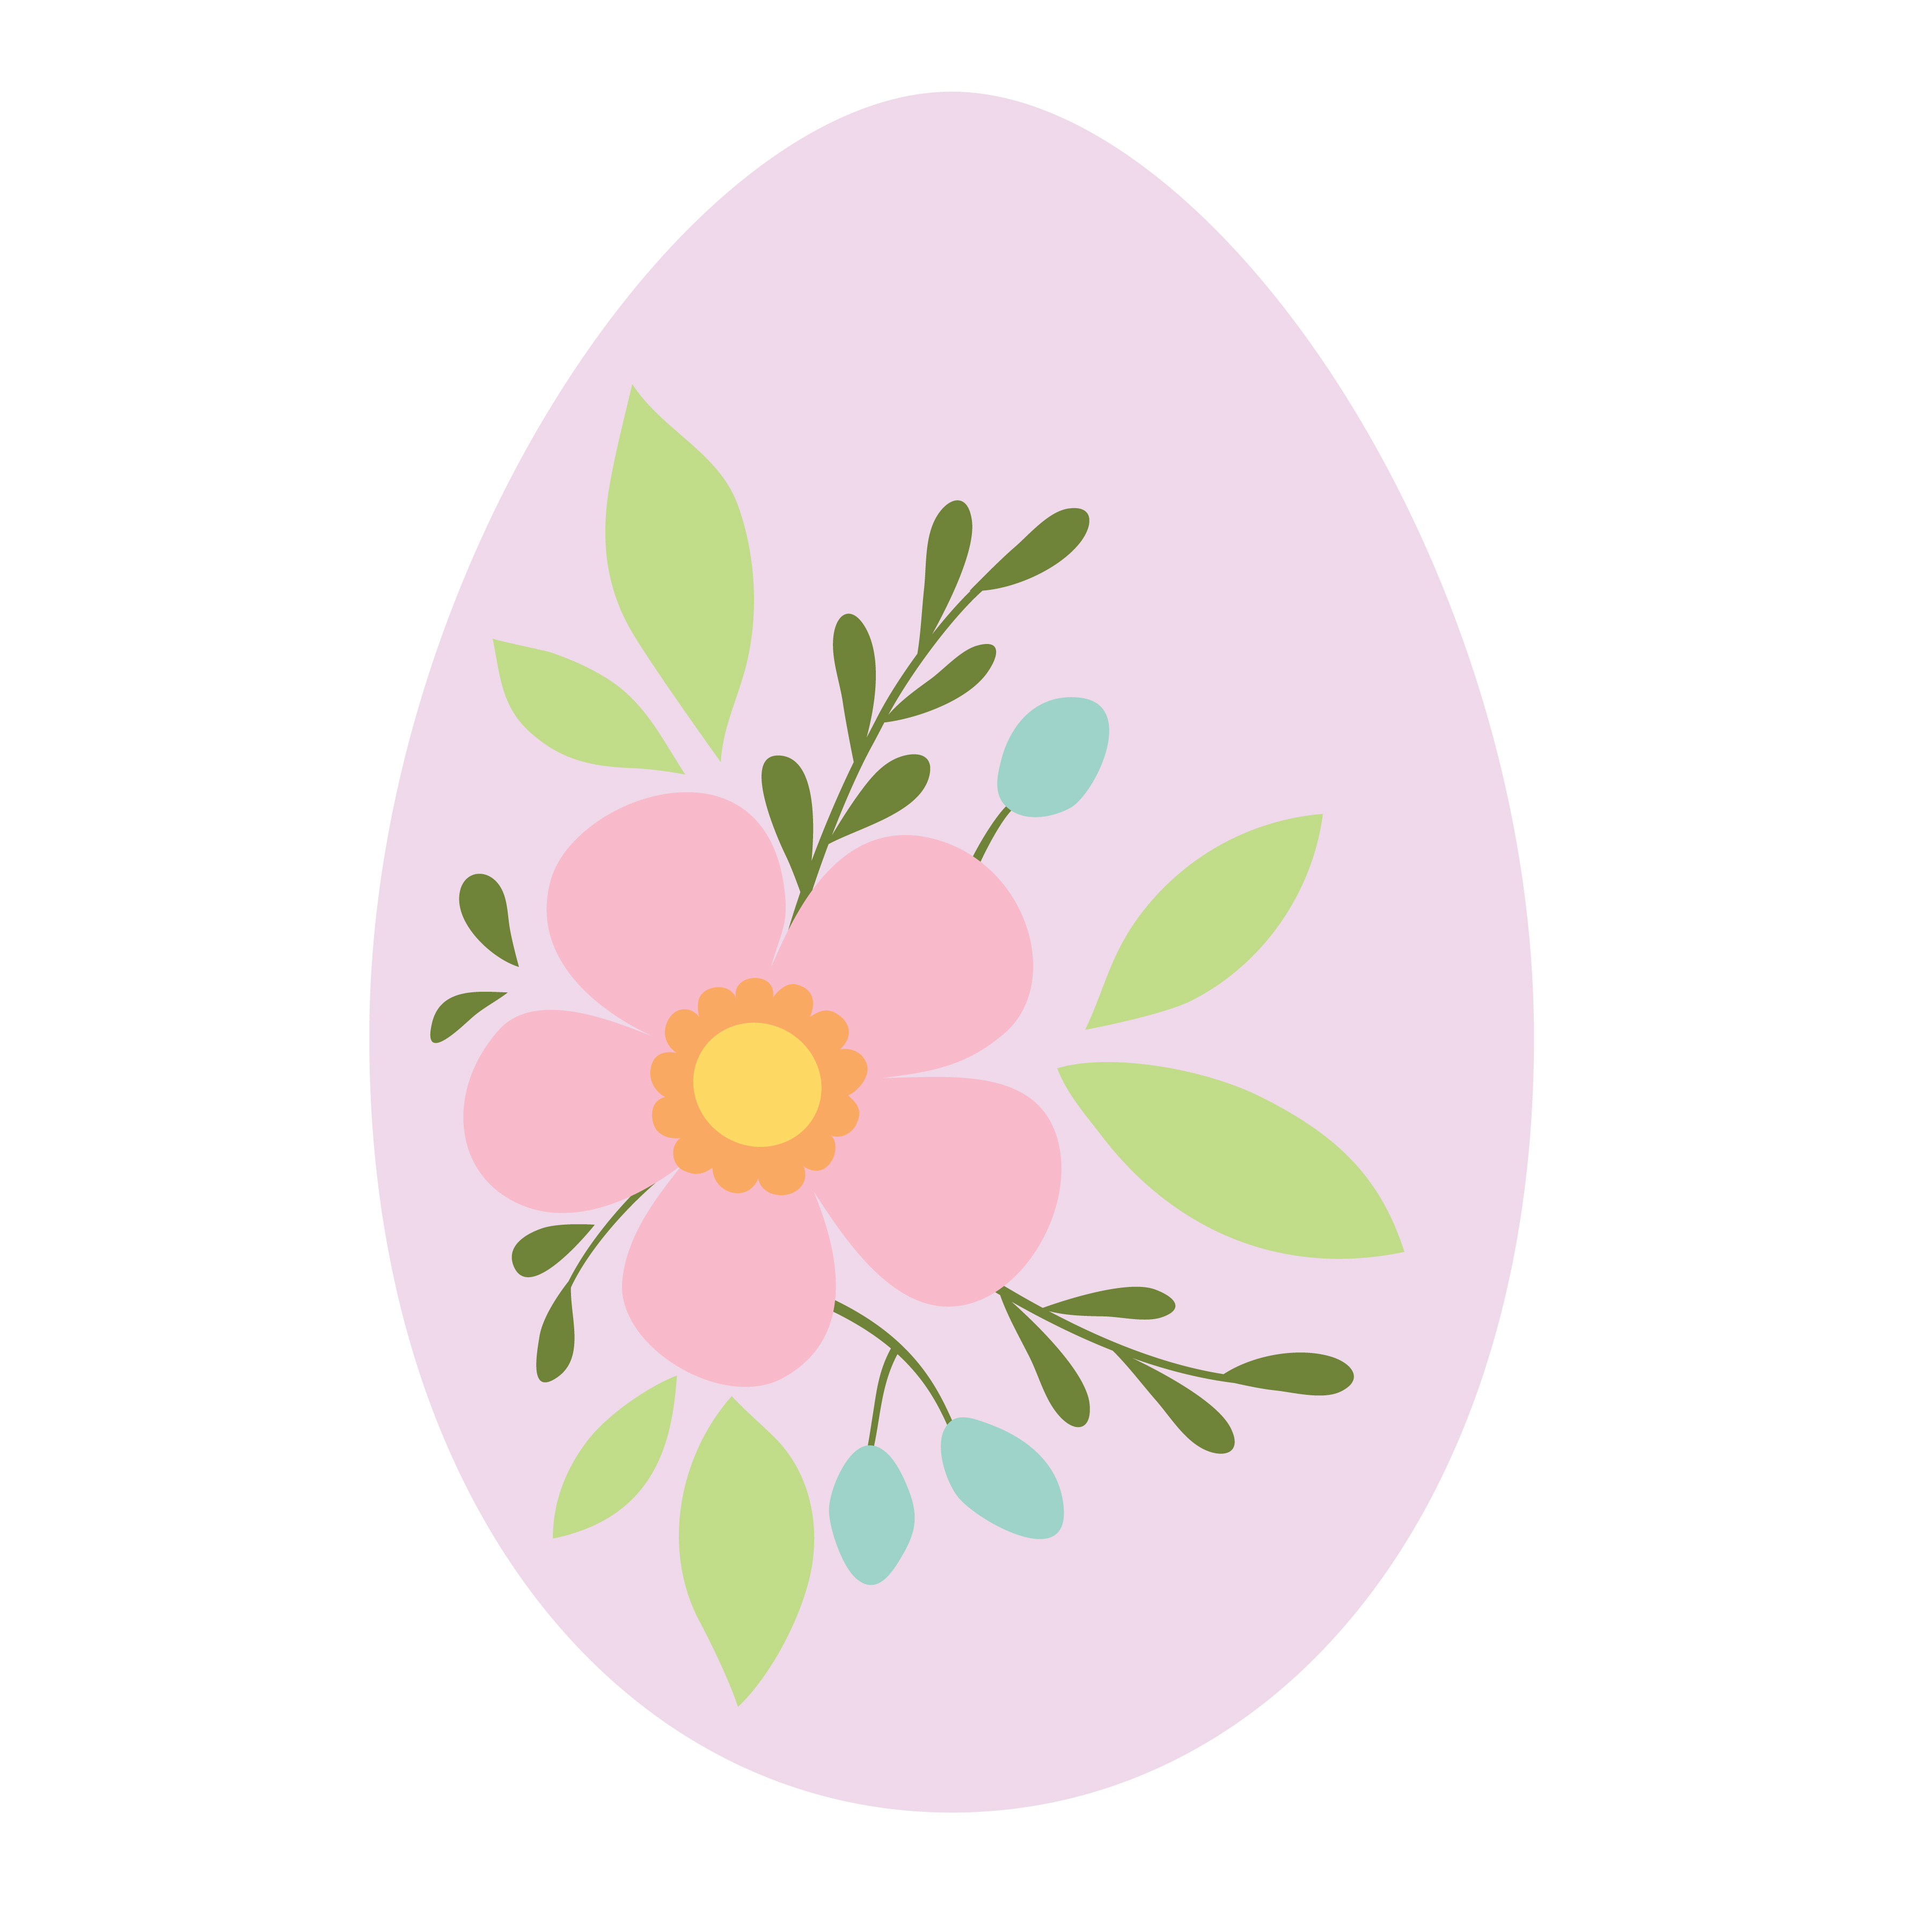 Floral Happy Easter Egg Stencil